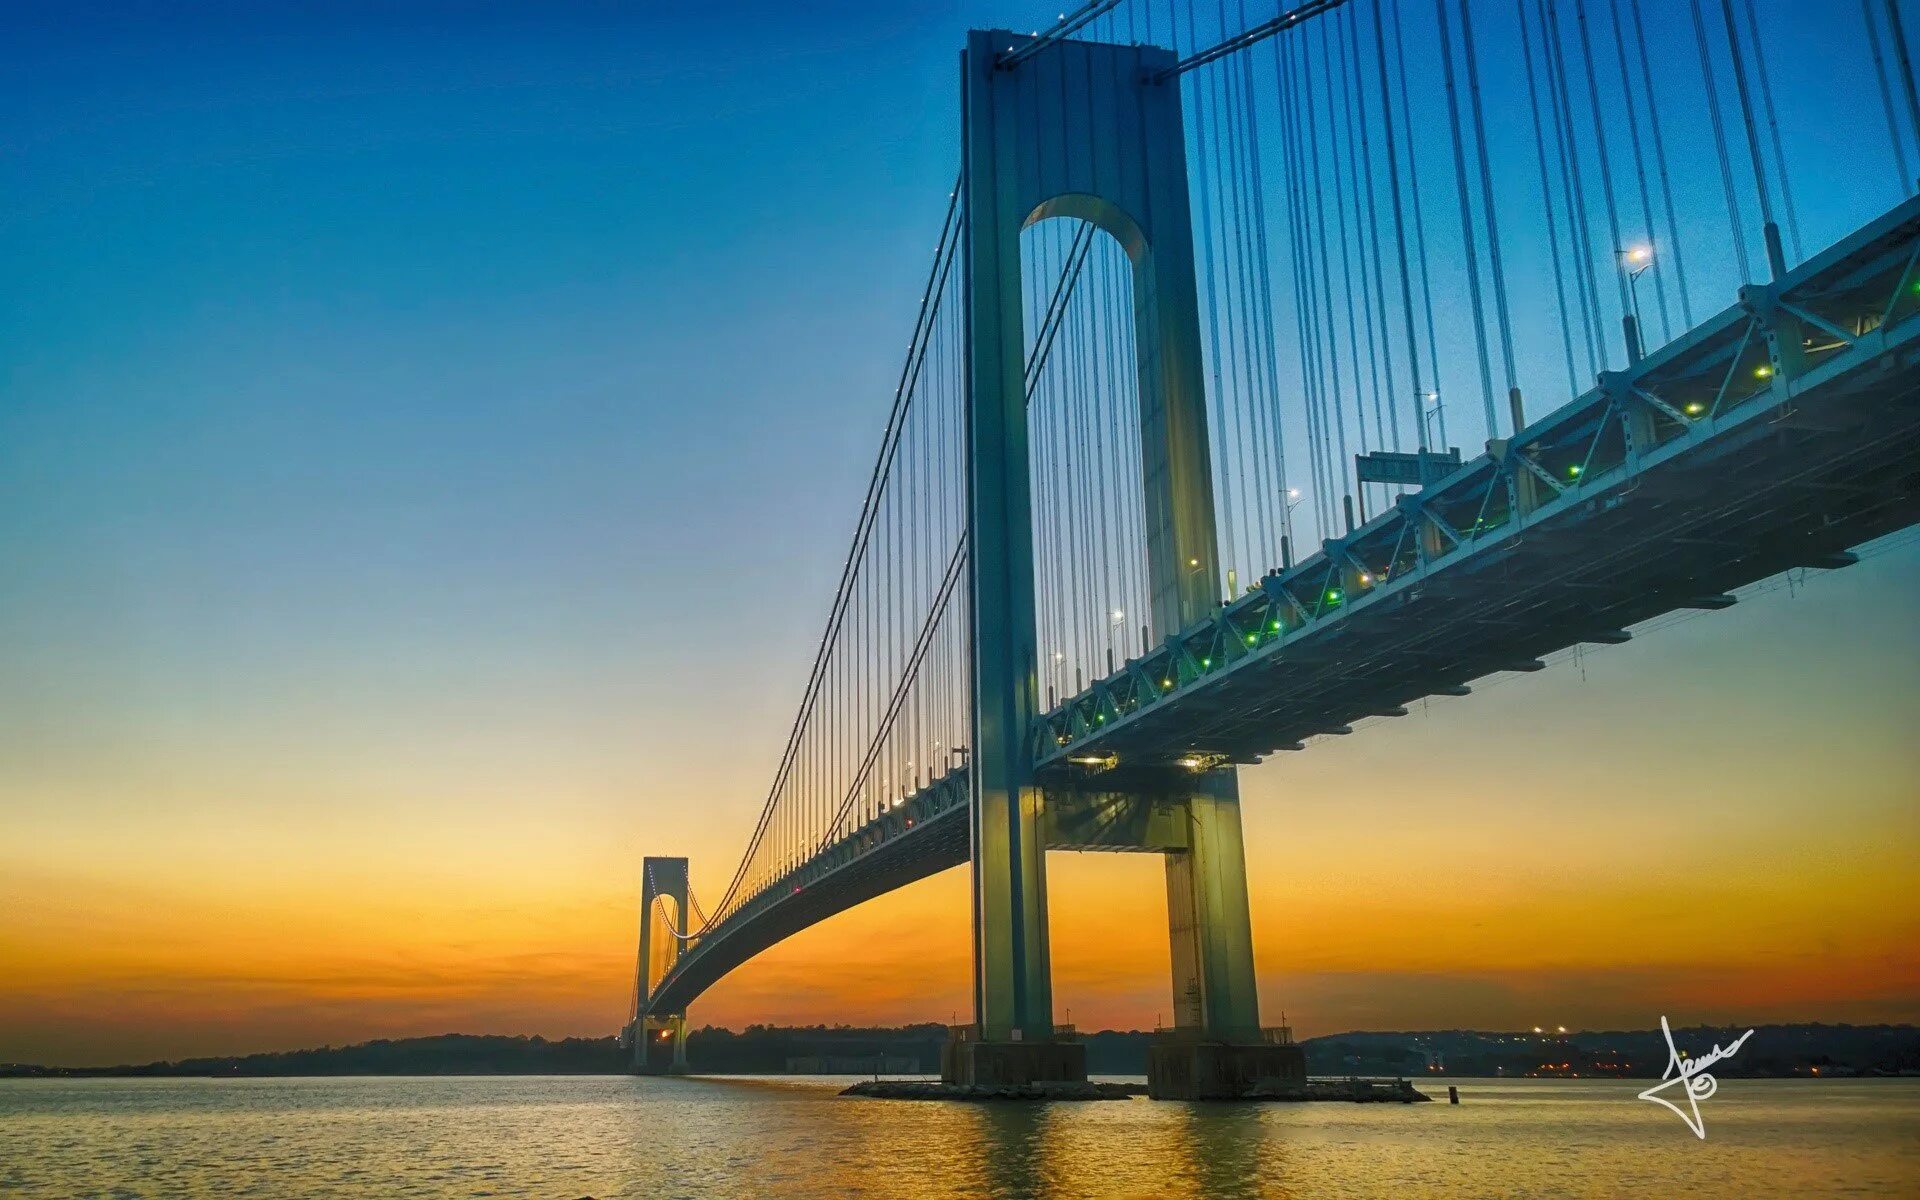 Бридж. Мост Verrazano narrows. Мост Верразано в Нью-Йорке. Веррацано-Нарроус. Нью-йоркского моста Веррацано-Нарроус.